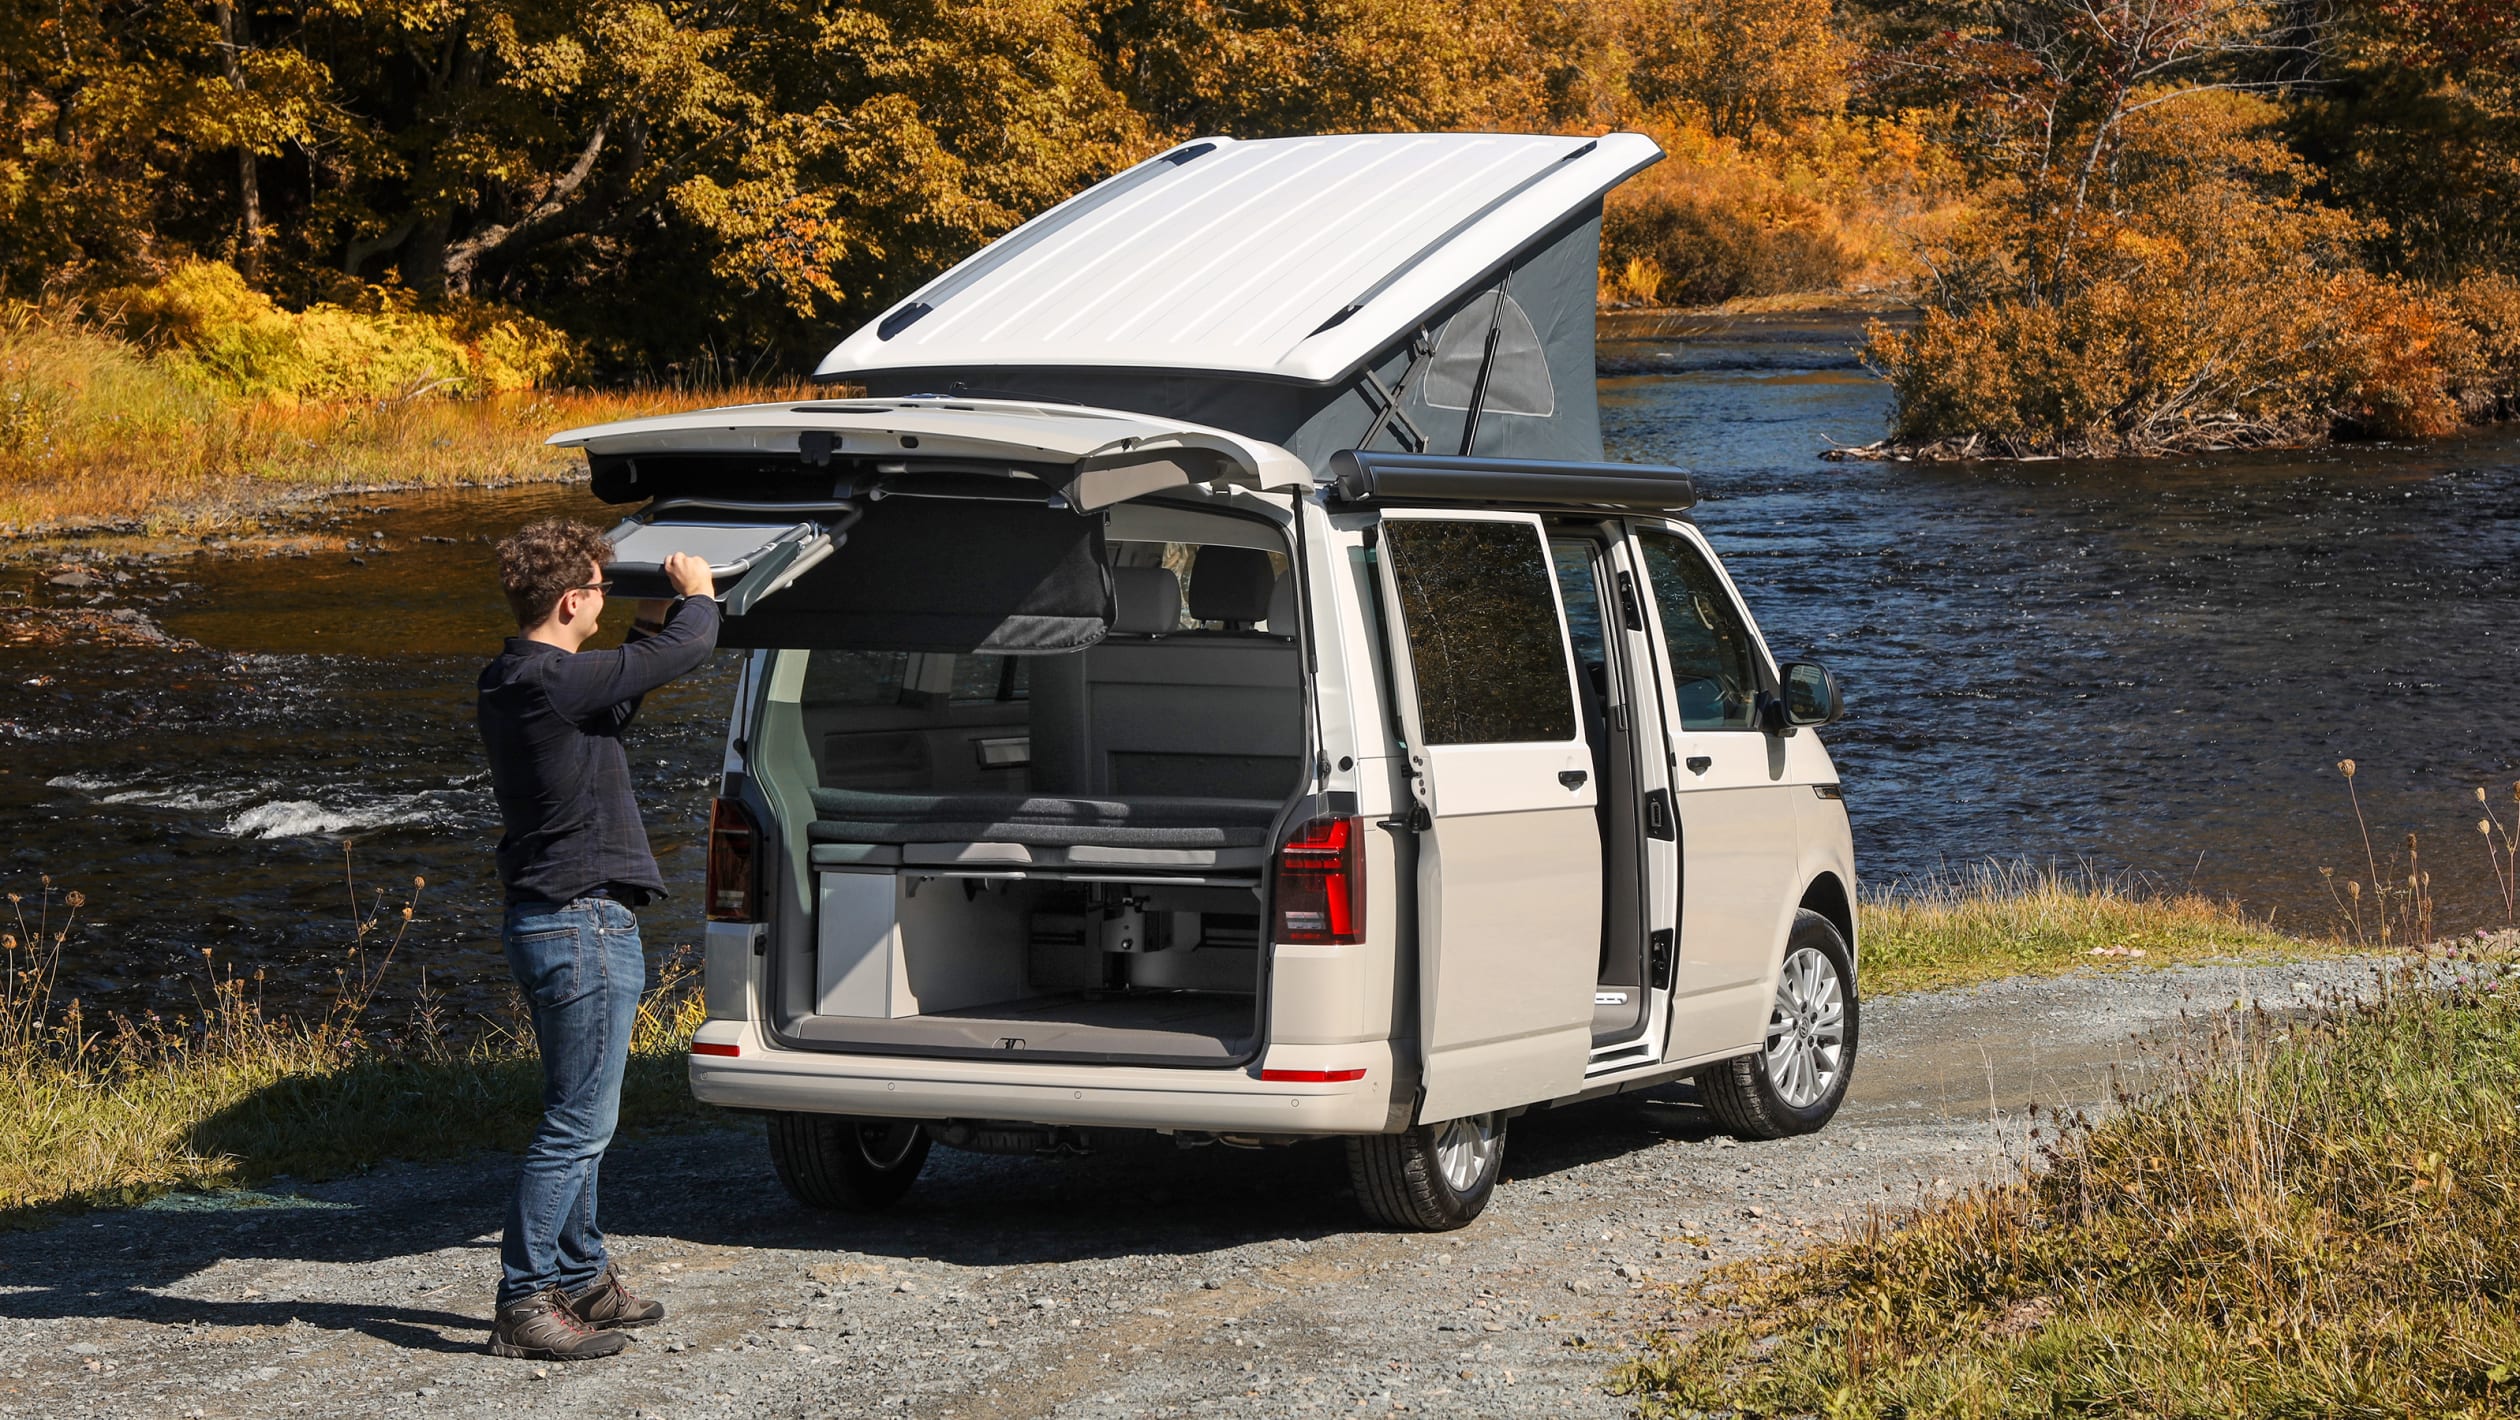 Volkswagen Multivan California campervan confirmed - Automotive Daily